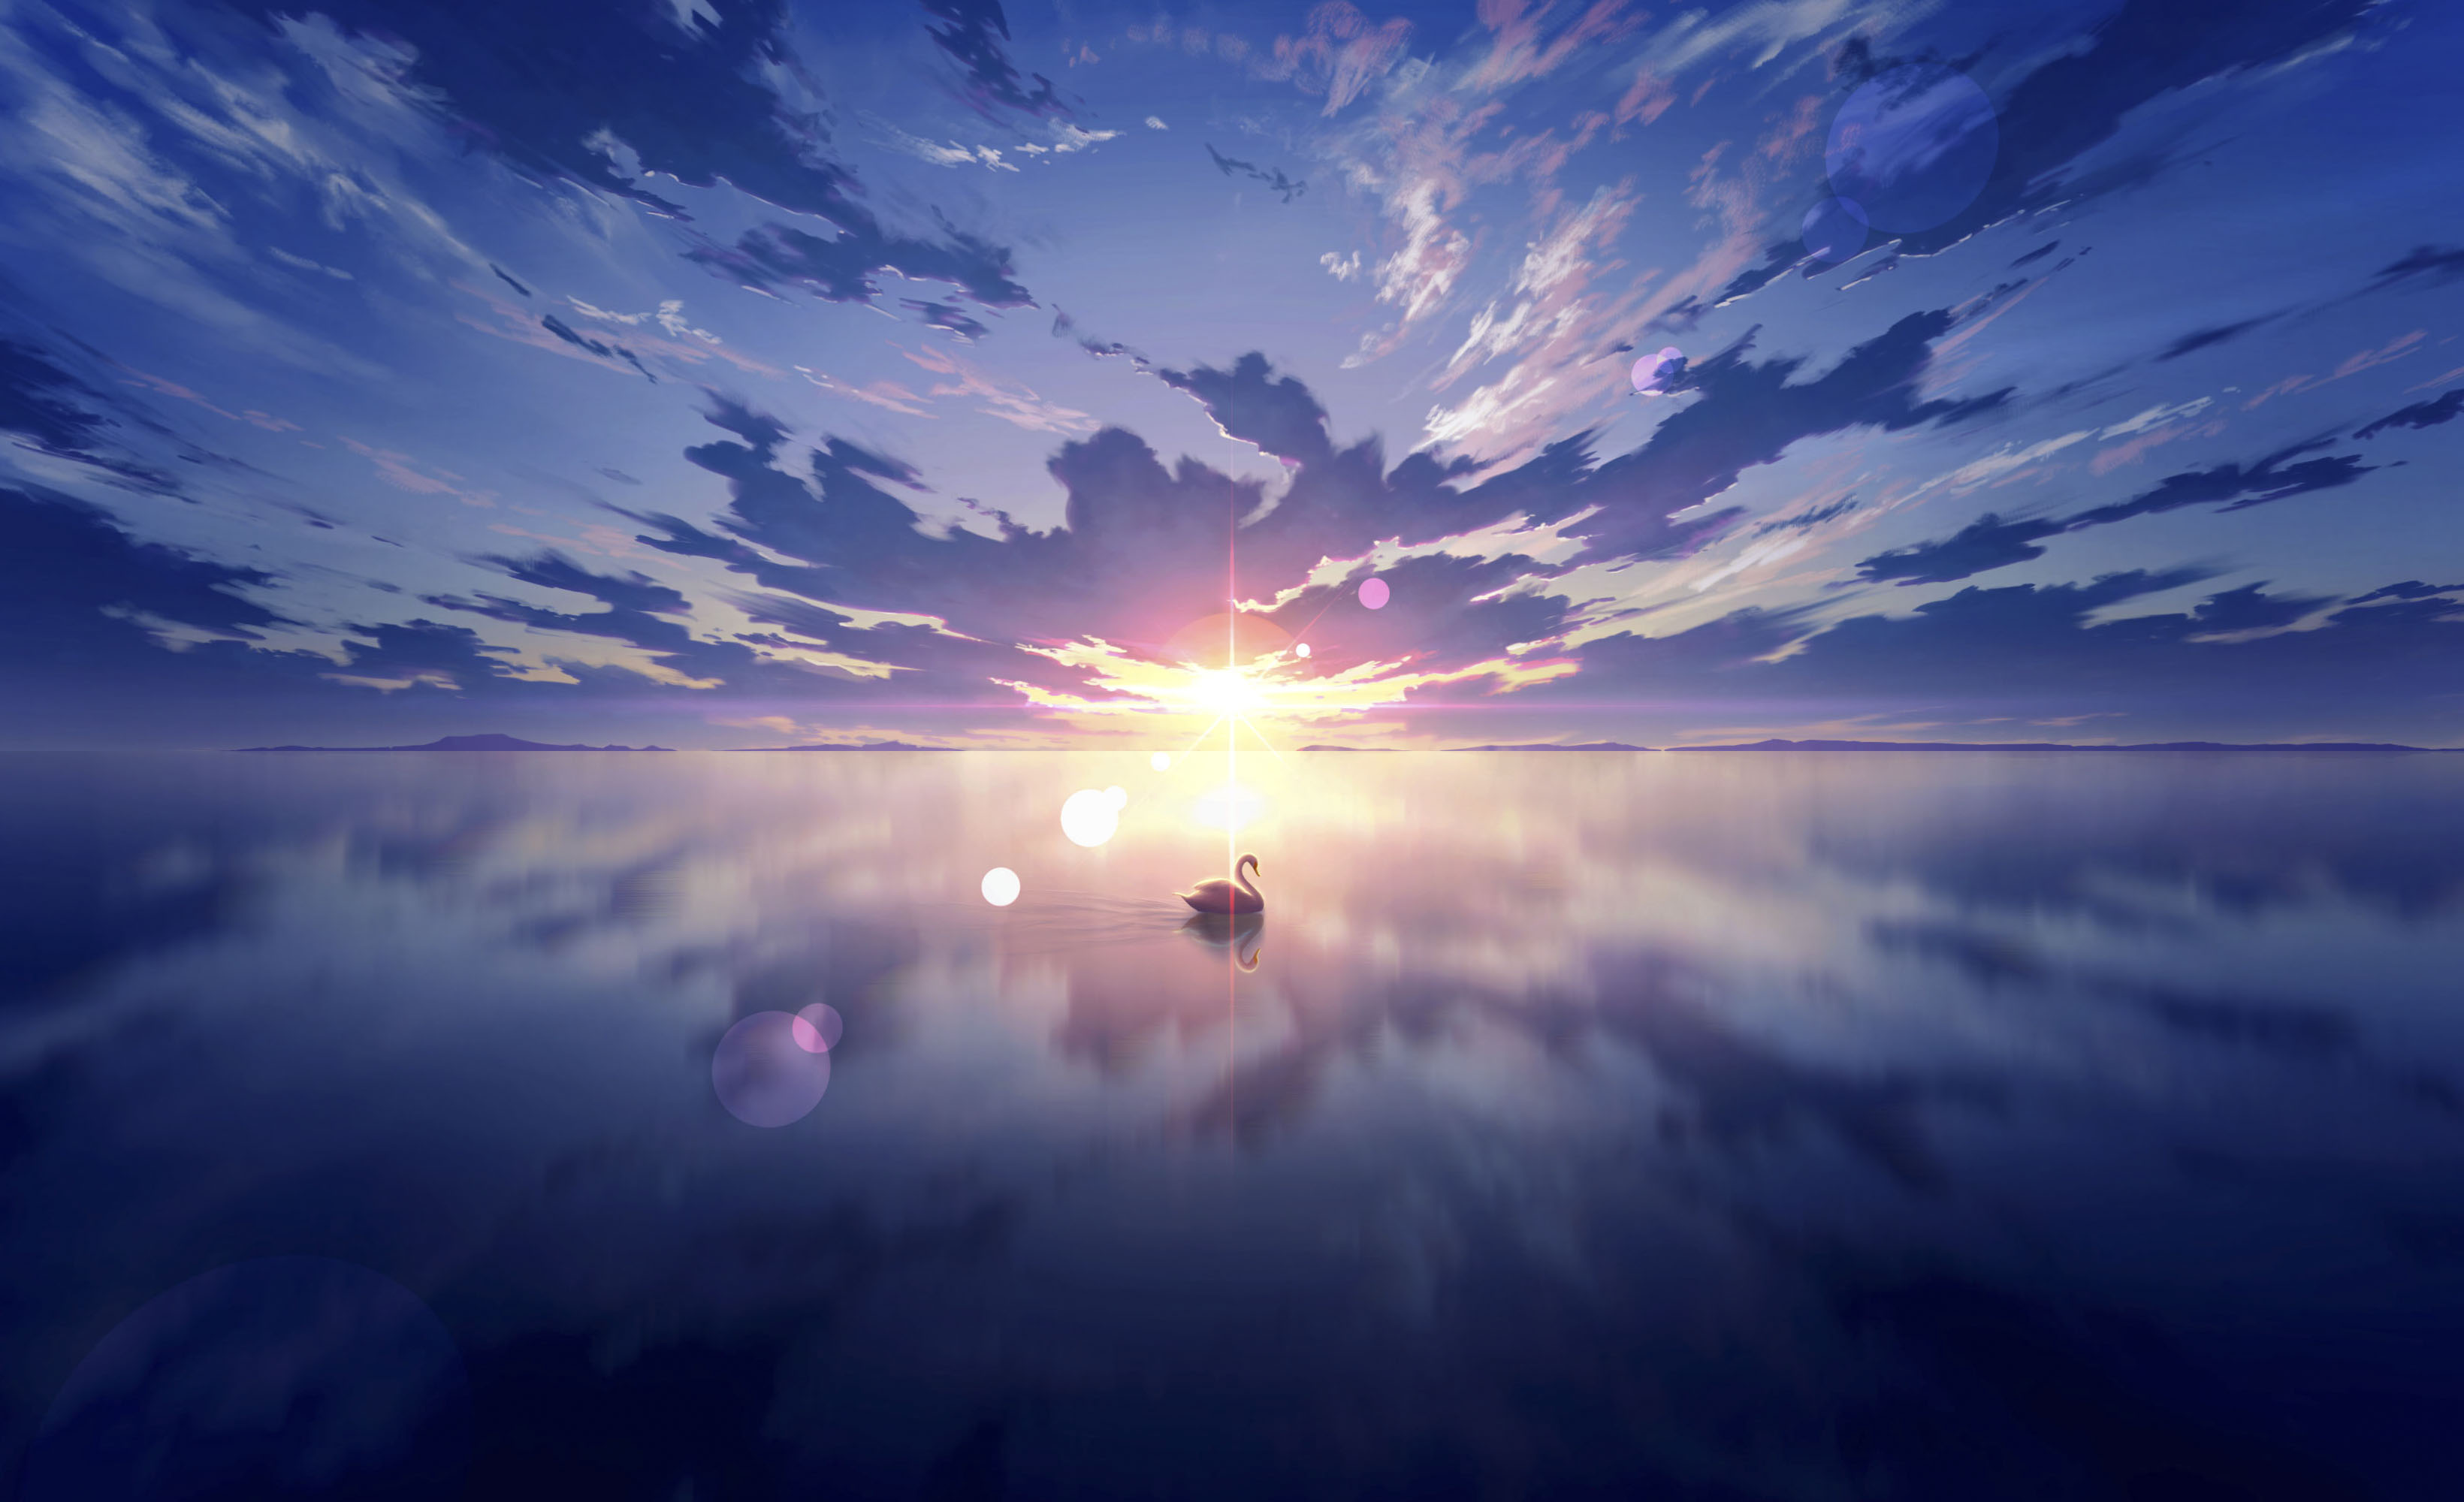 Anime 3280x2000 anime sky skyscape lake swans reflection shining sunlight nature water sea landscape clouds sun rays Sun digital art artwork